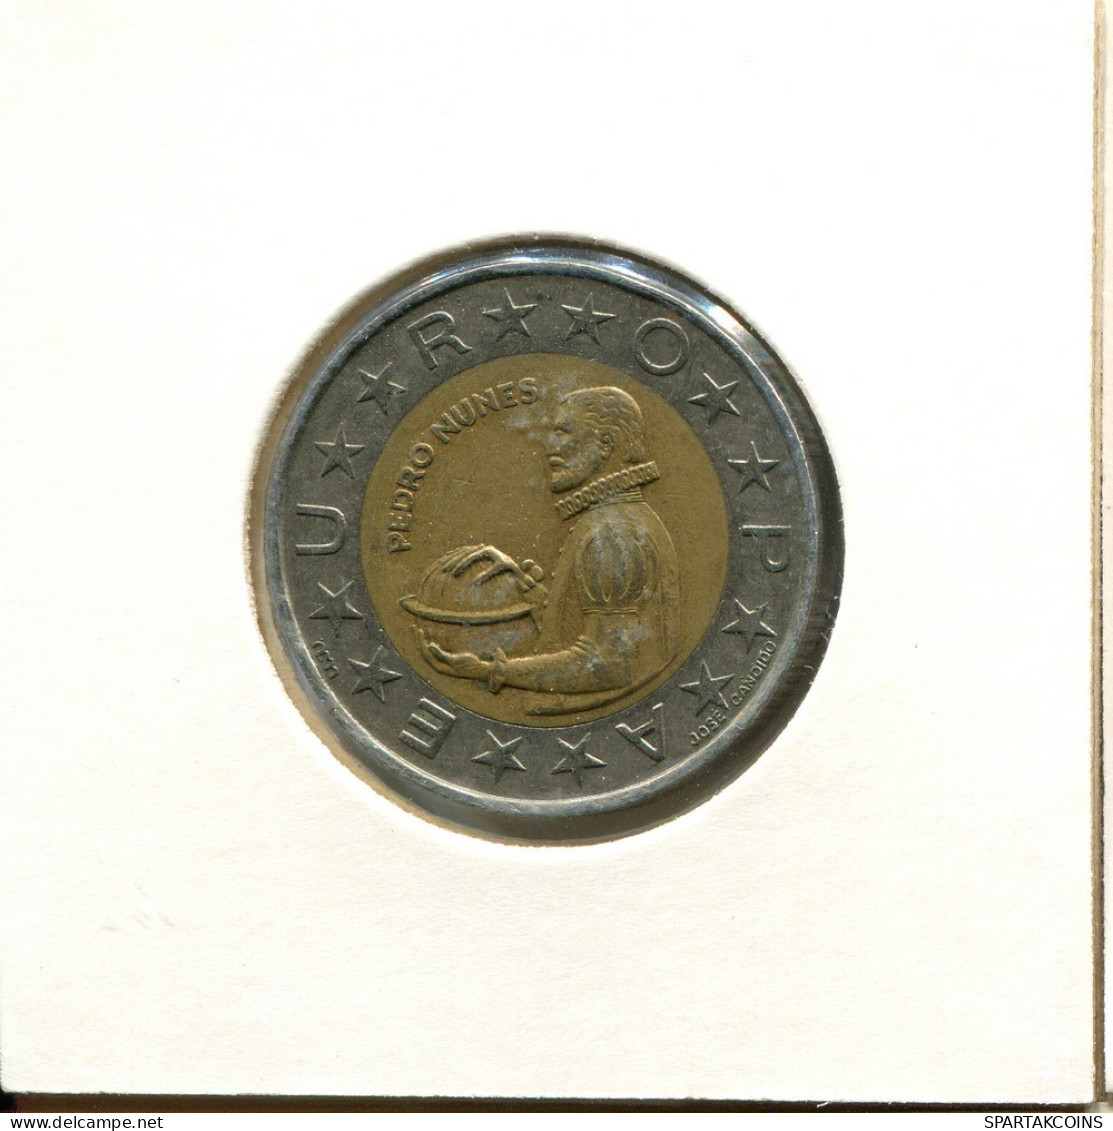 100 ESCUDOS 1990 PORTUGAL Coin BIMETALLIC #BA026.U.A - Portugal